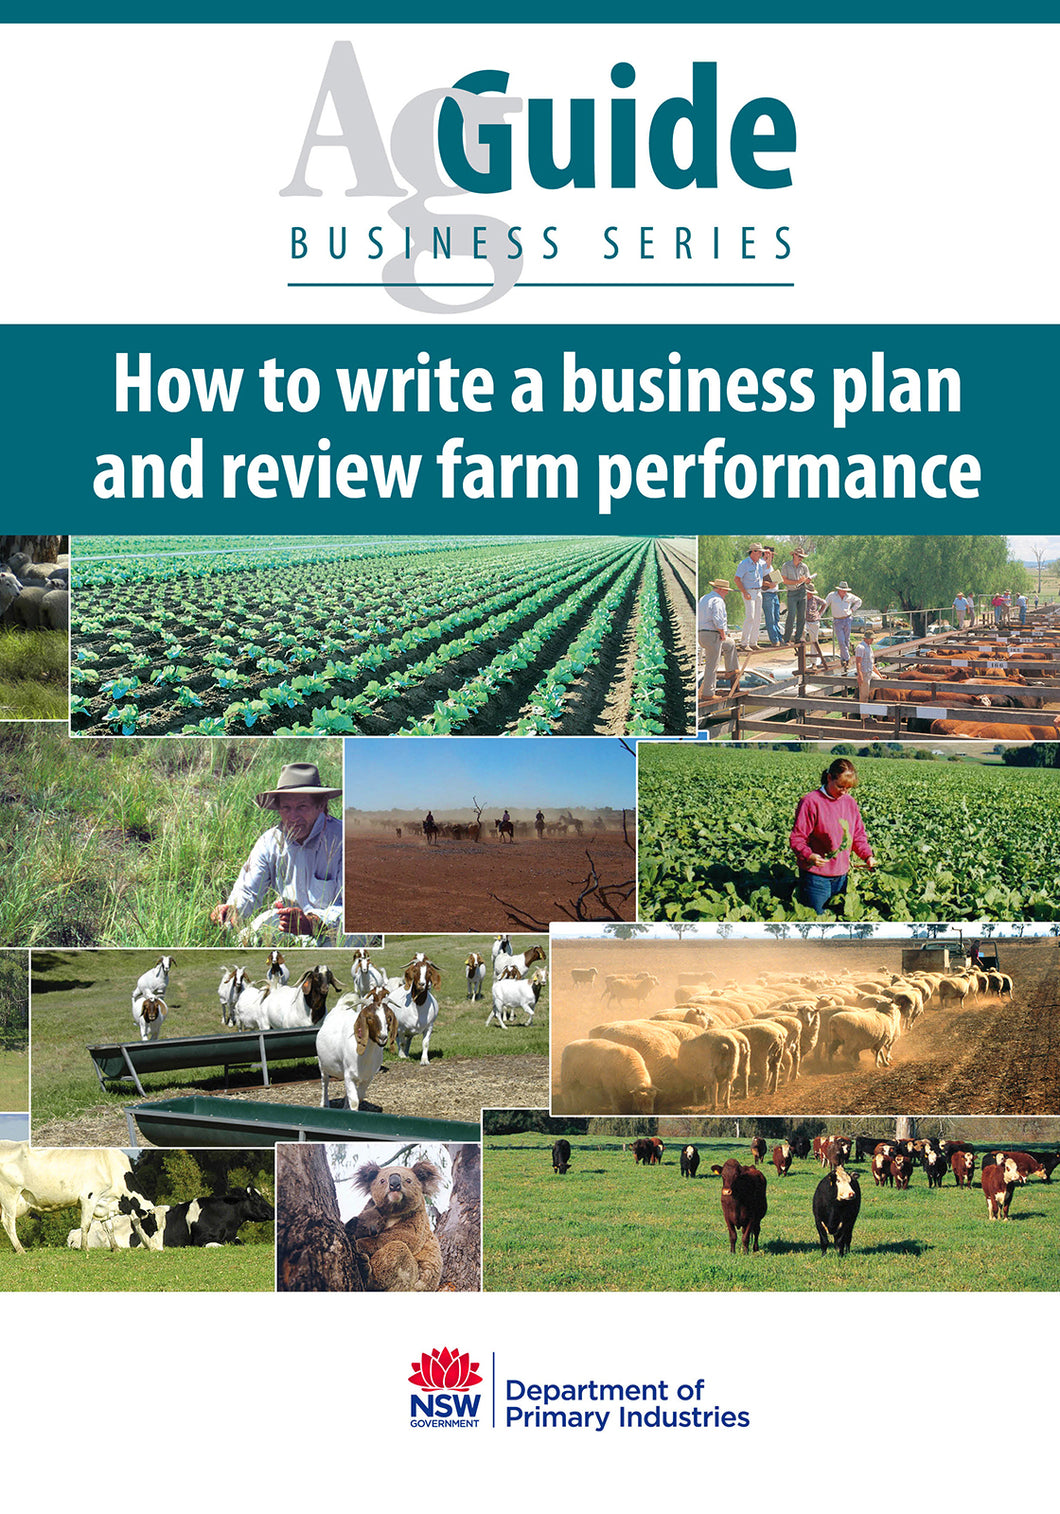 business plan of livestock